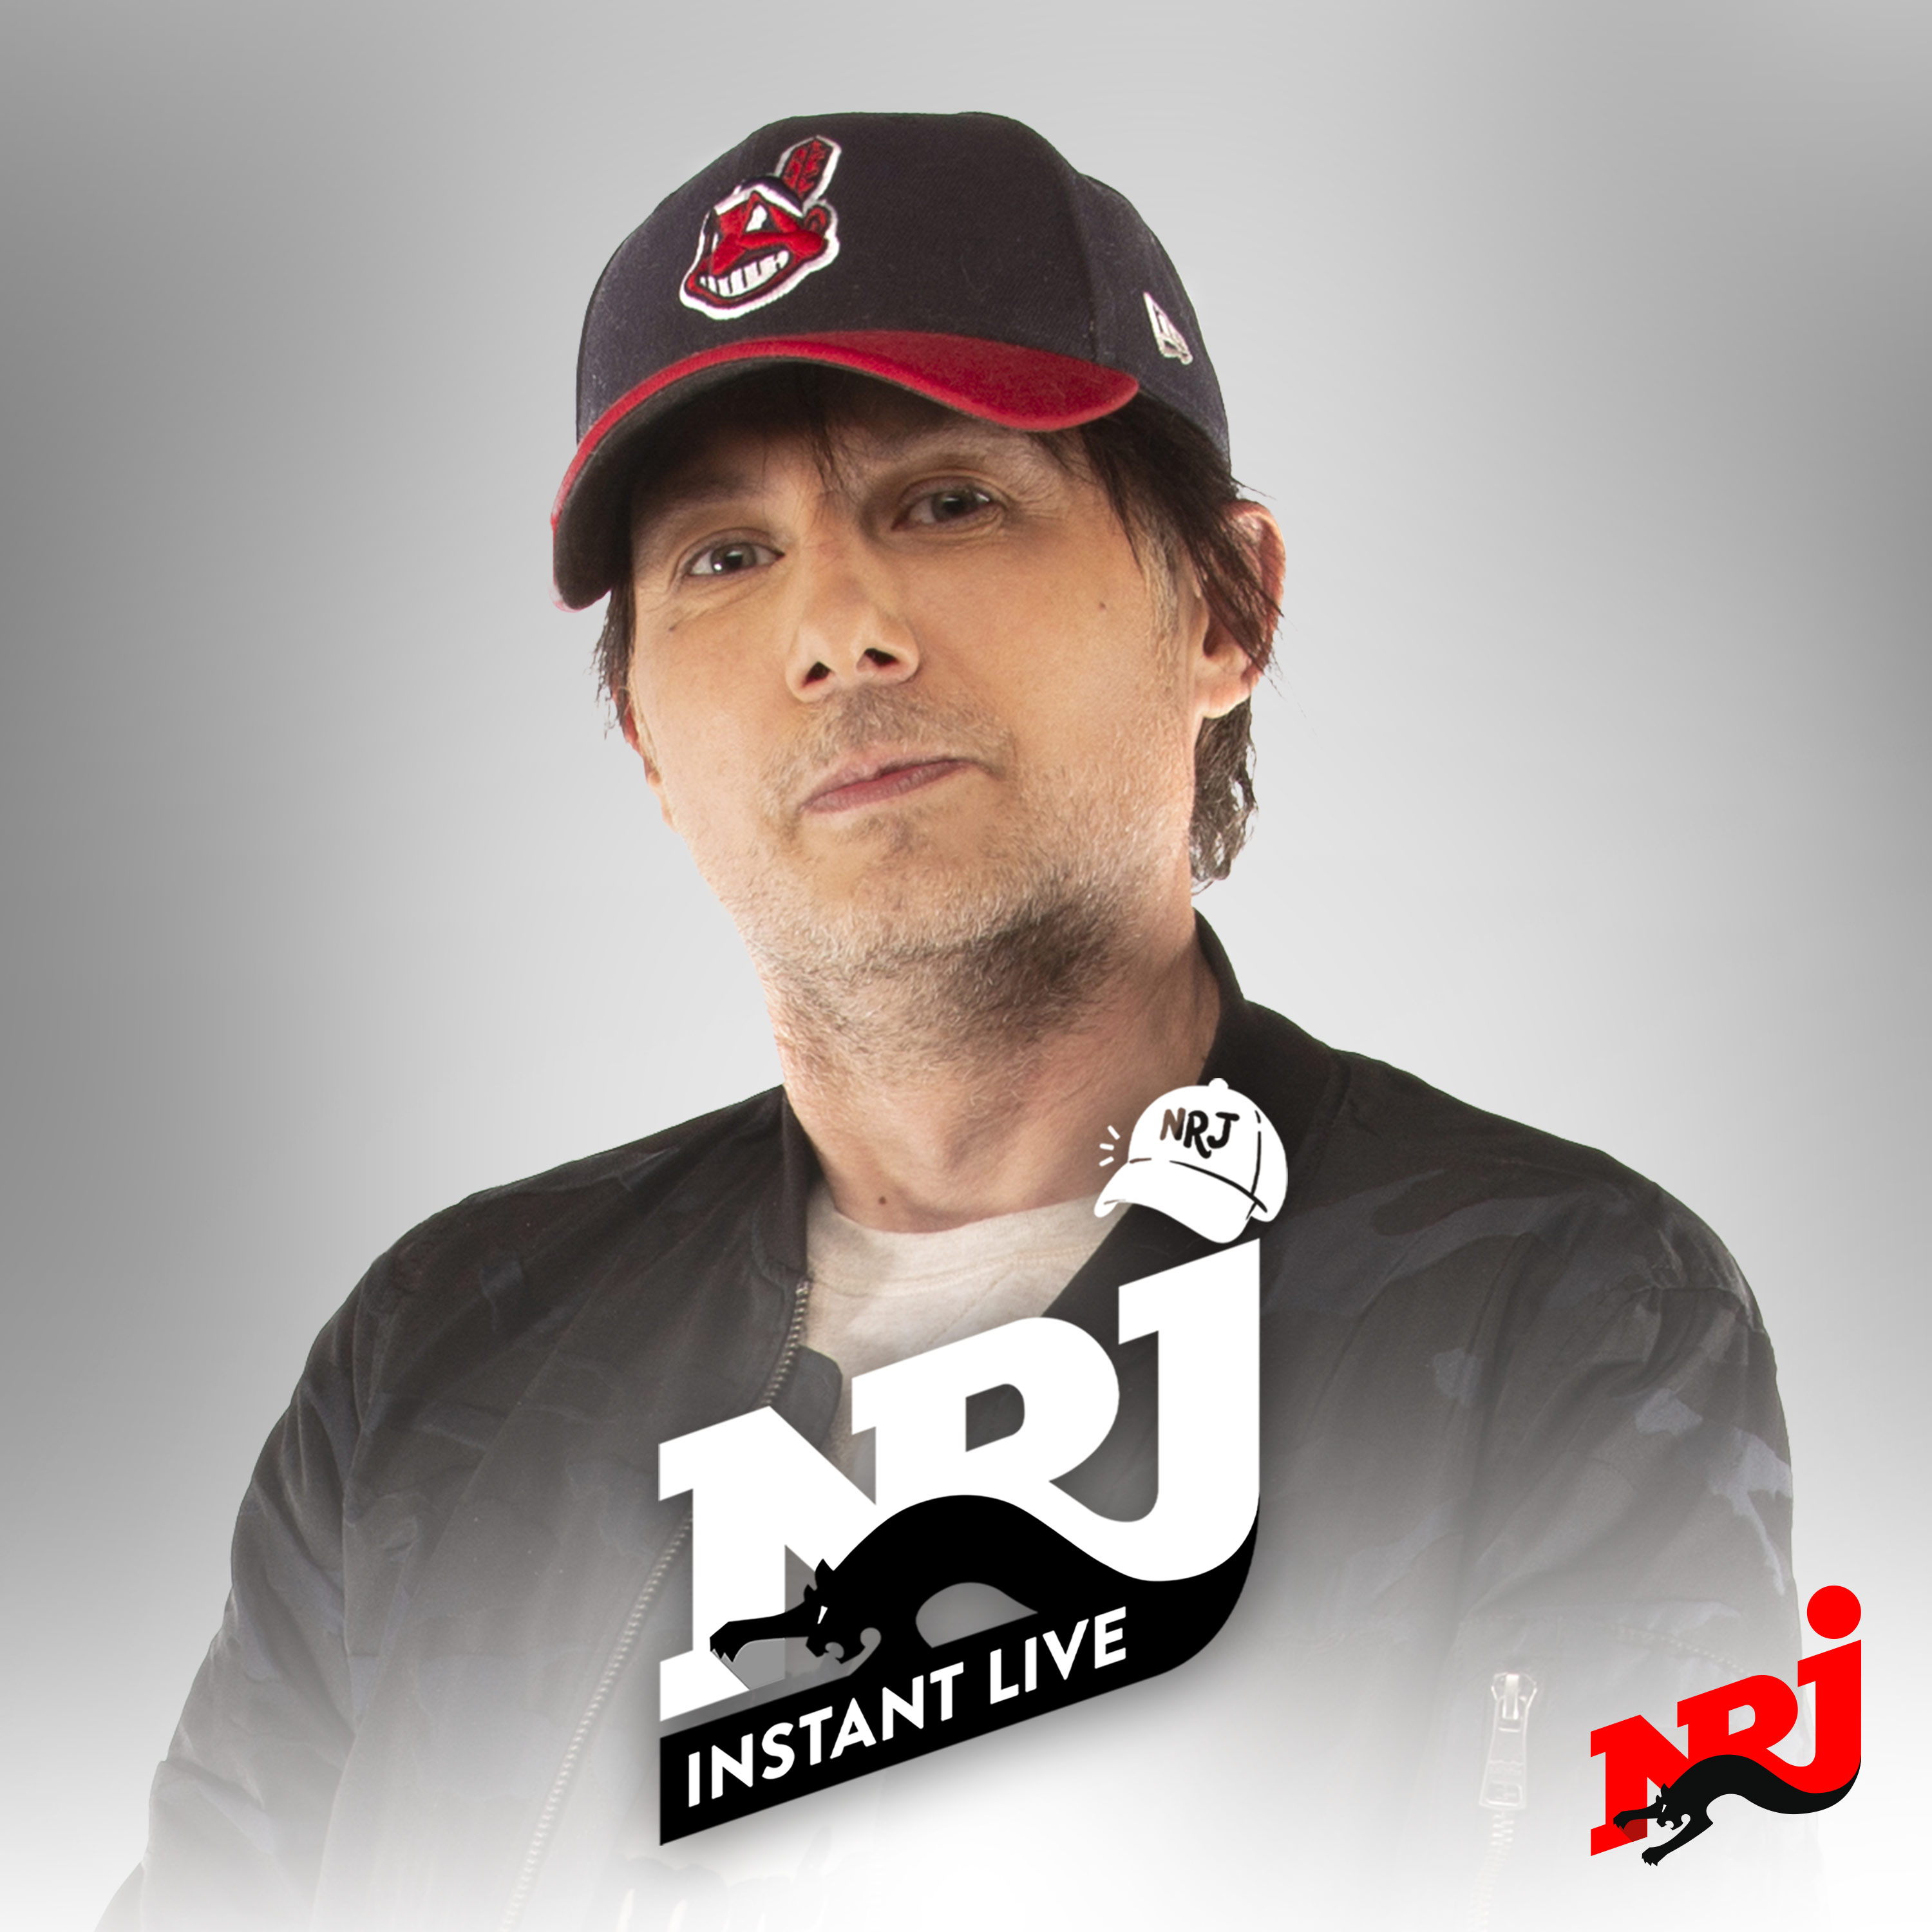 NRJ : Hit Music Only. Ecouter la radio en ligne, clips, actus, webradios